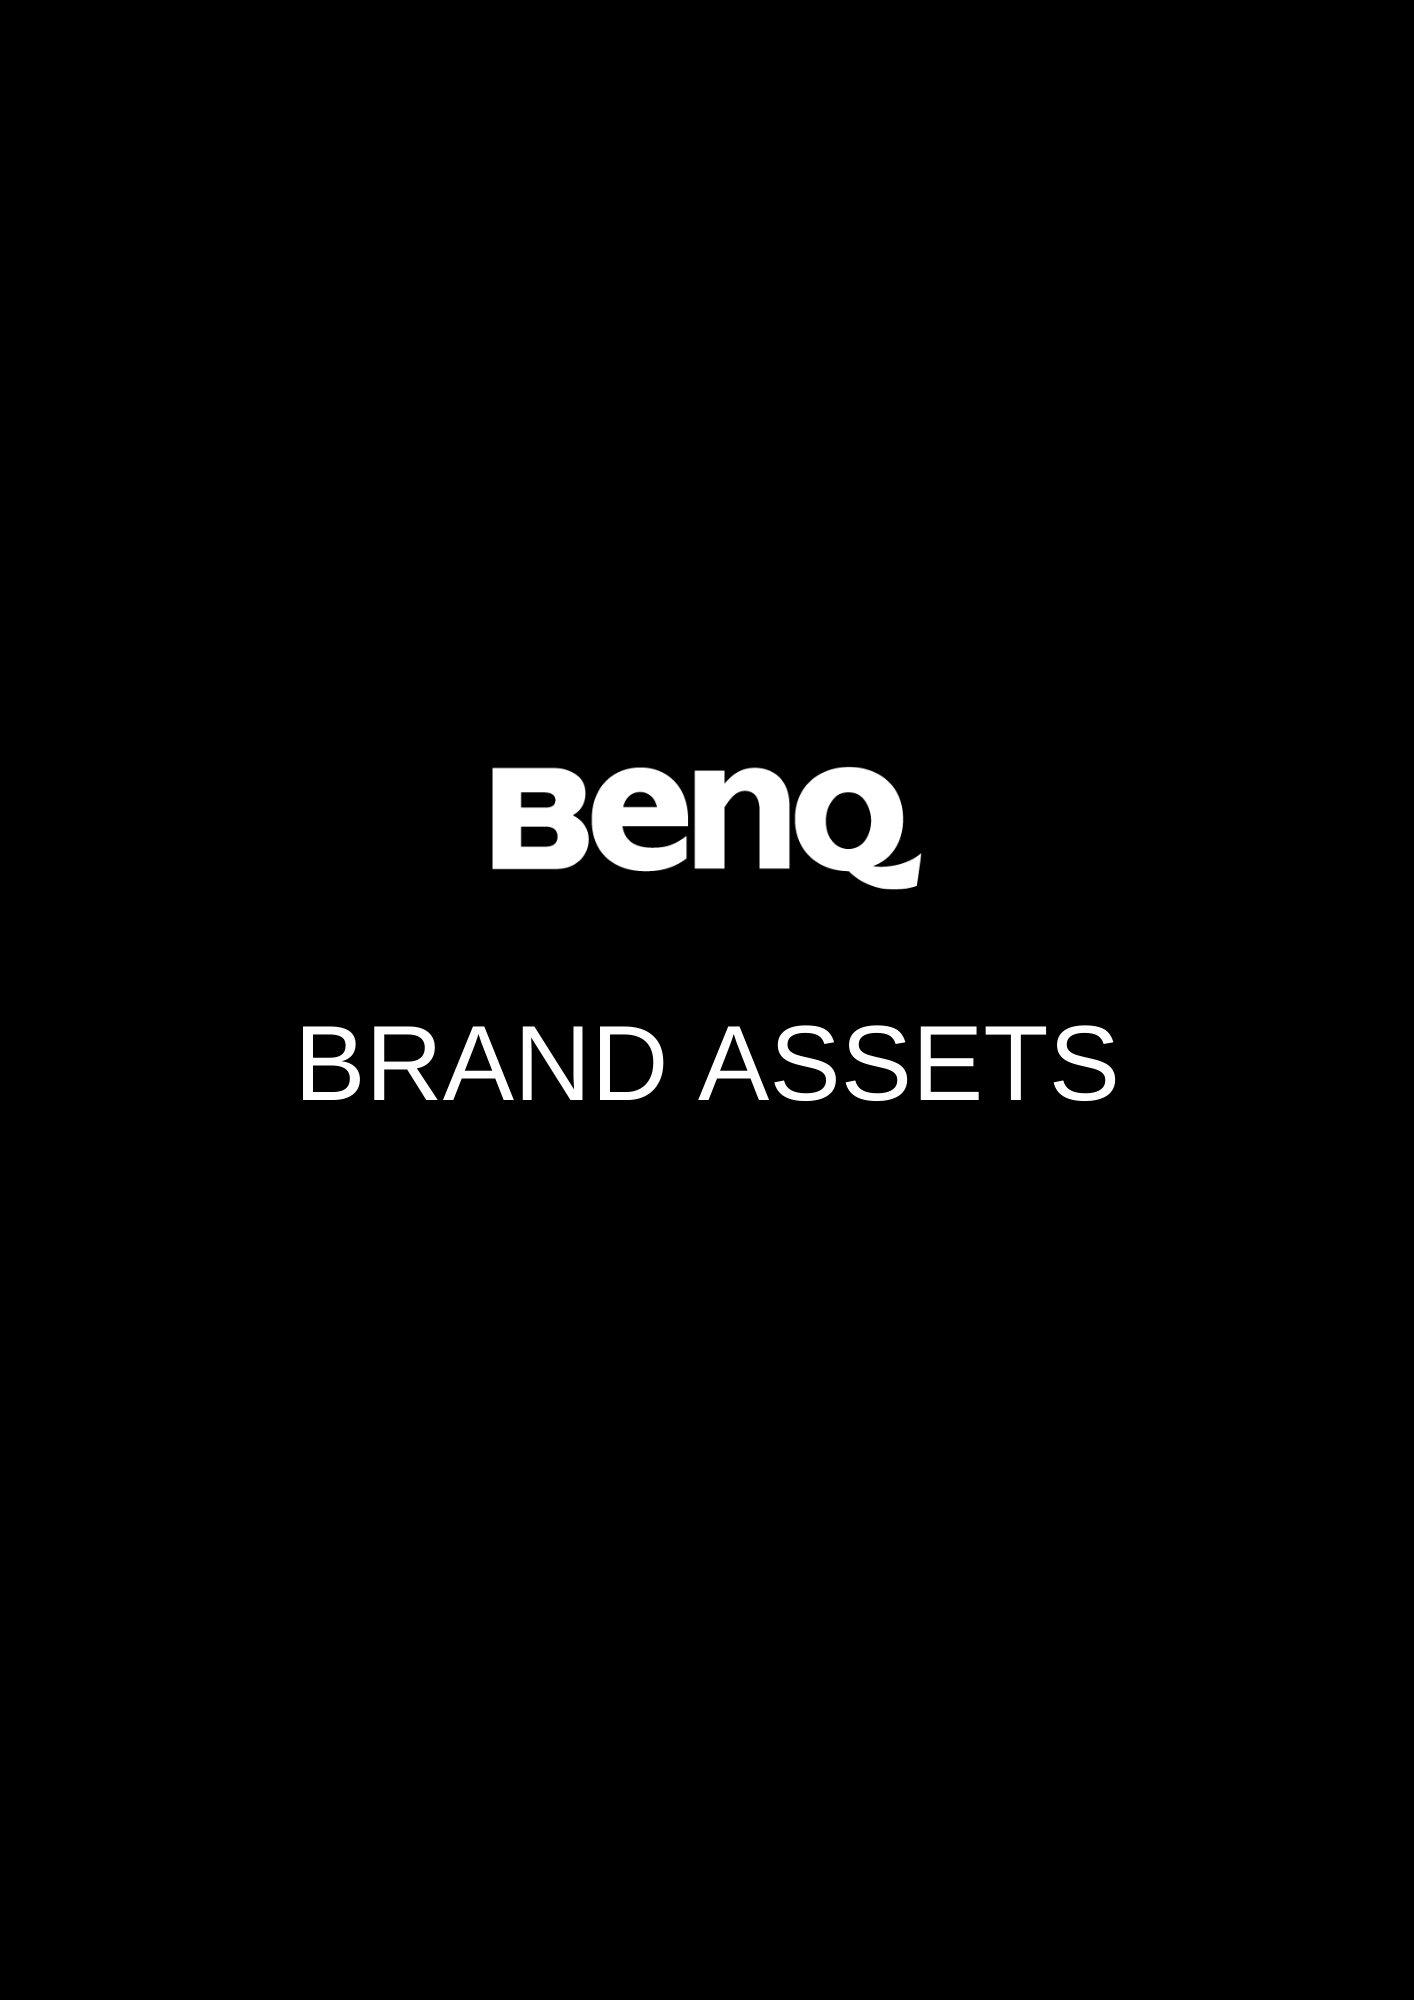 Brand assets